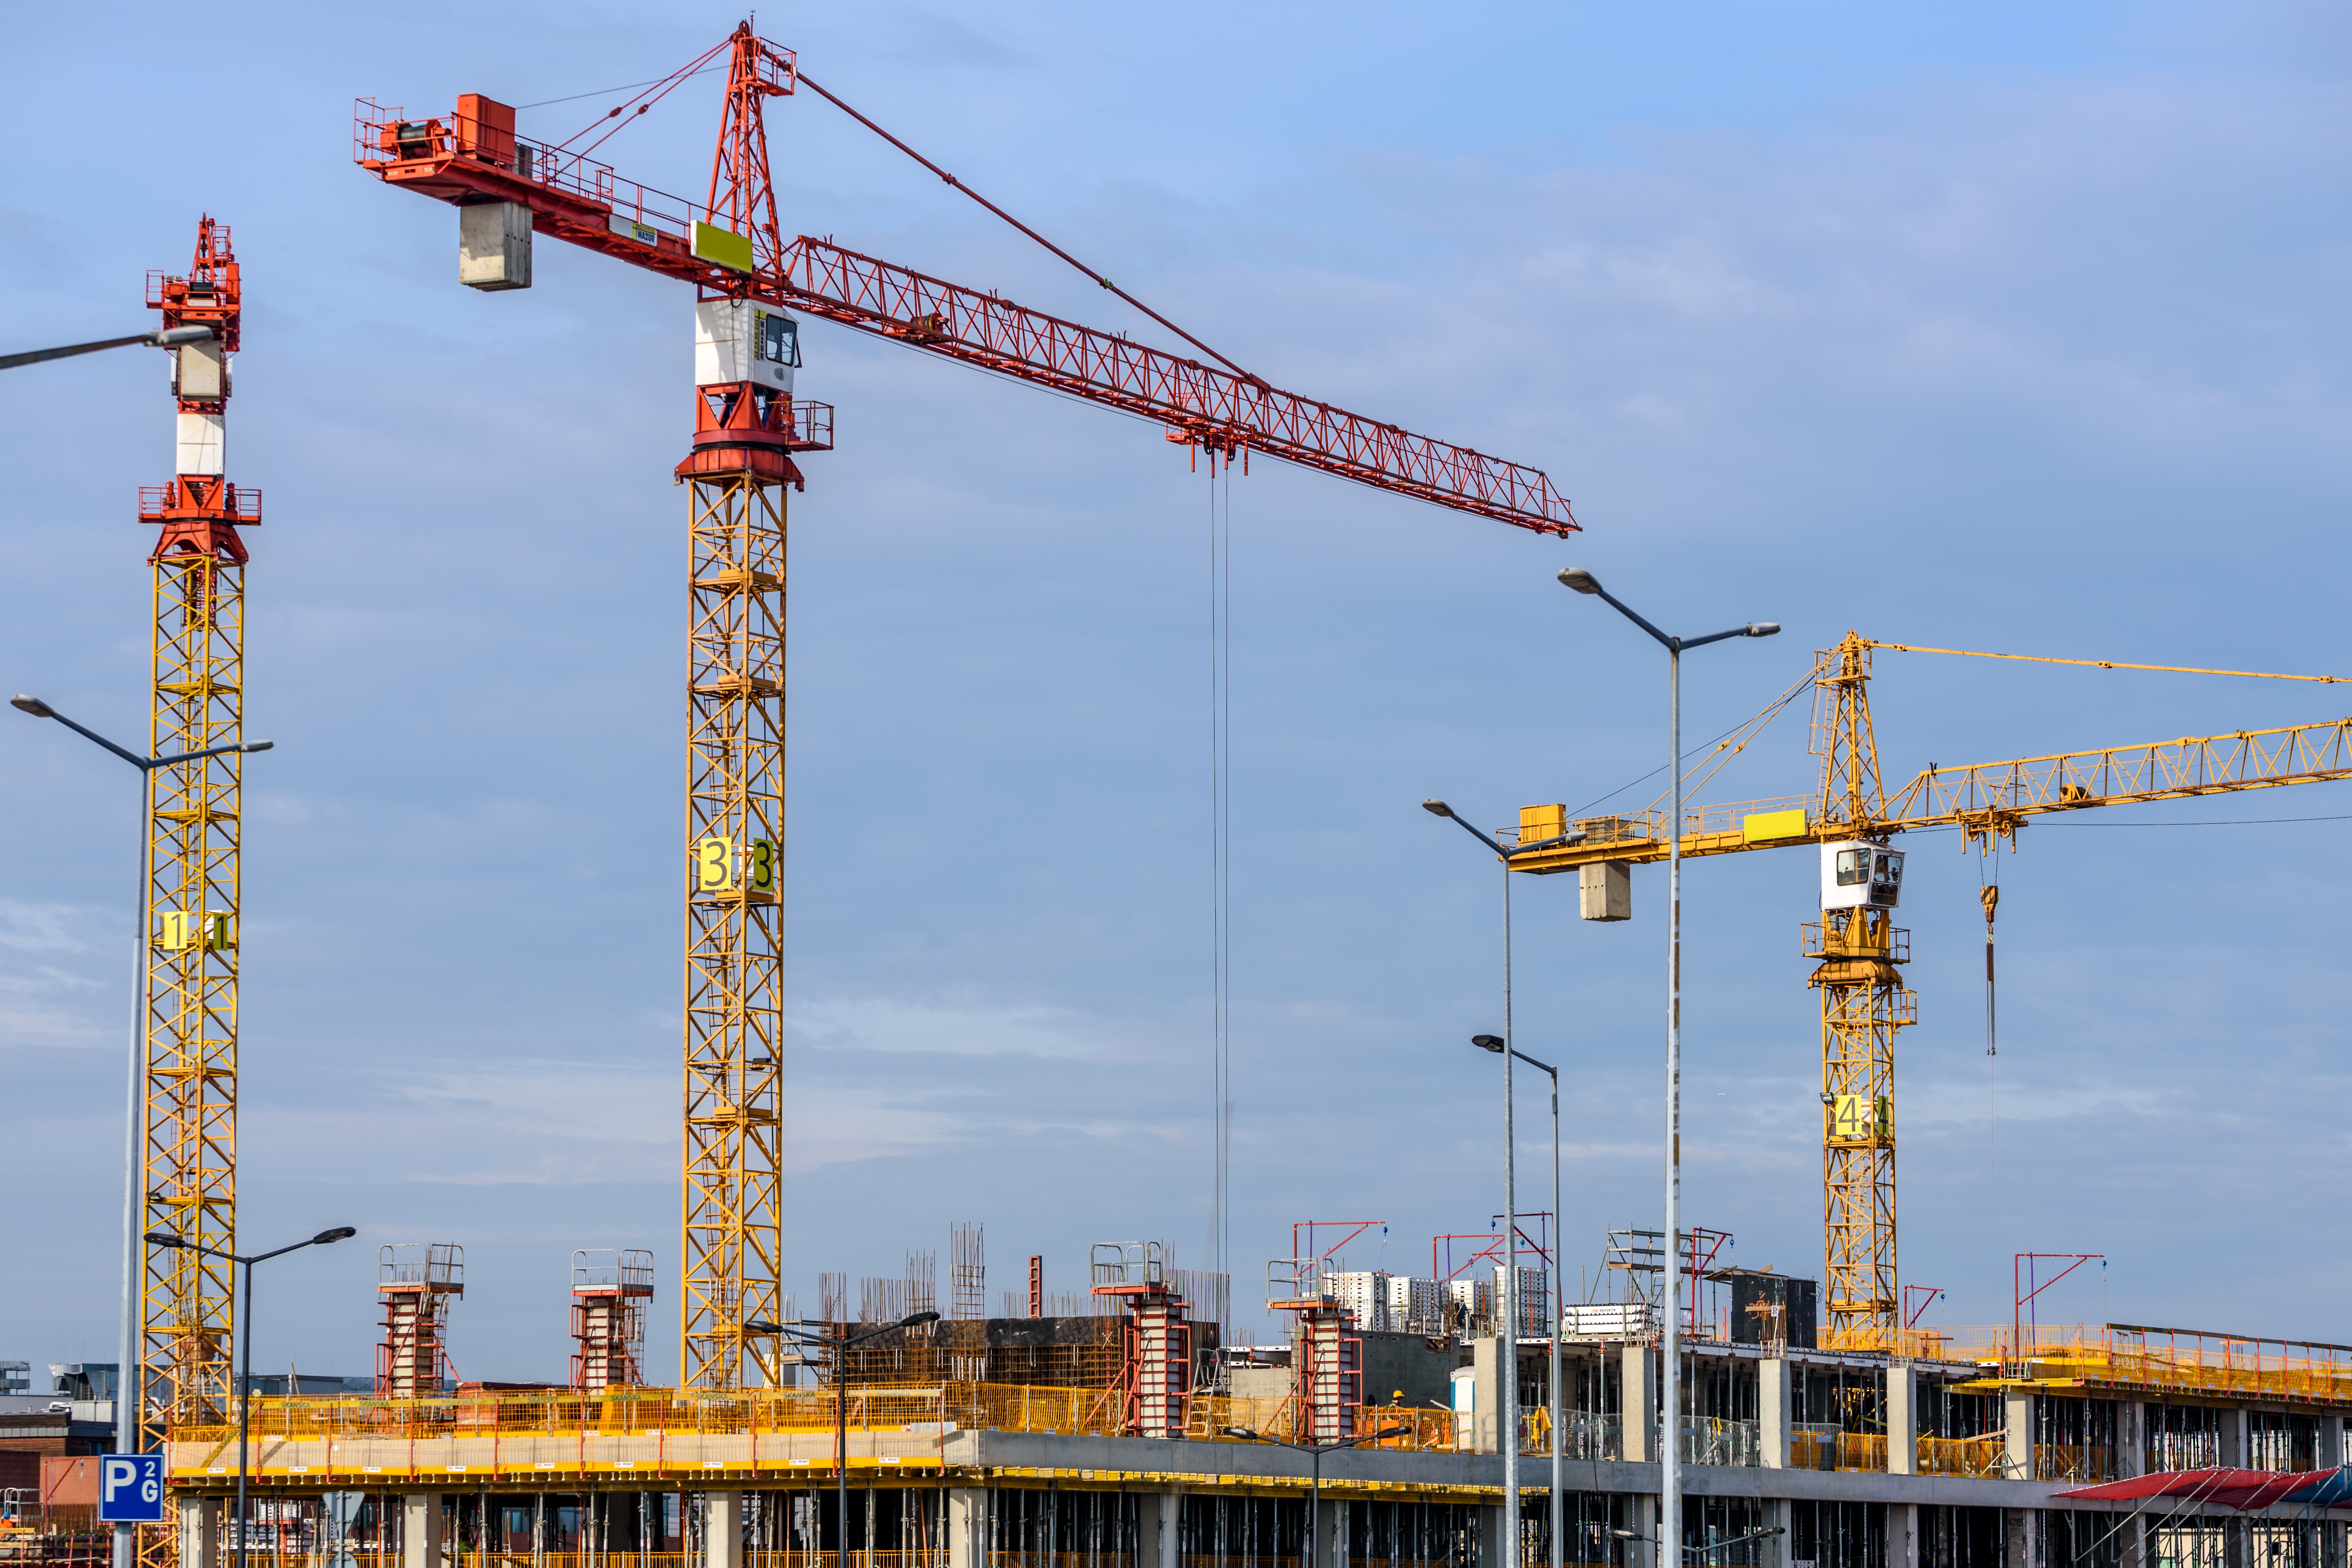 Construction site, sky full of cranes